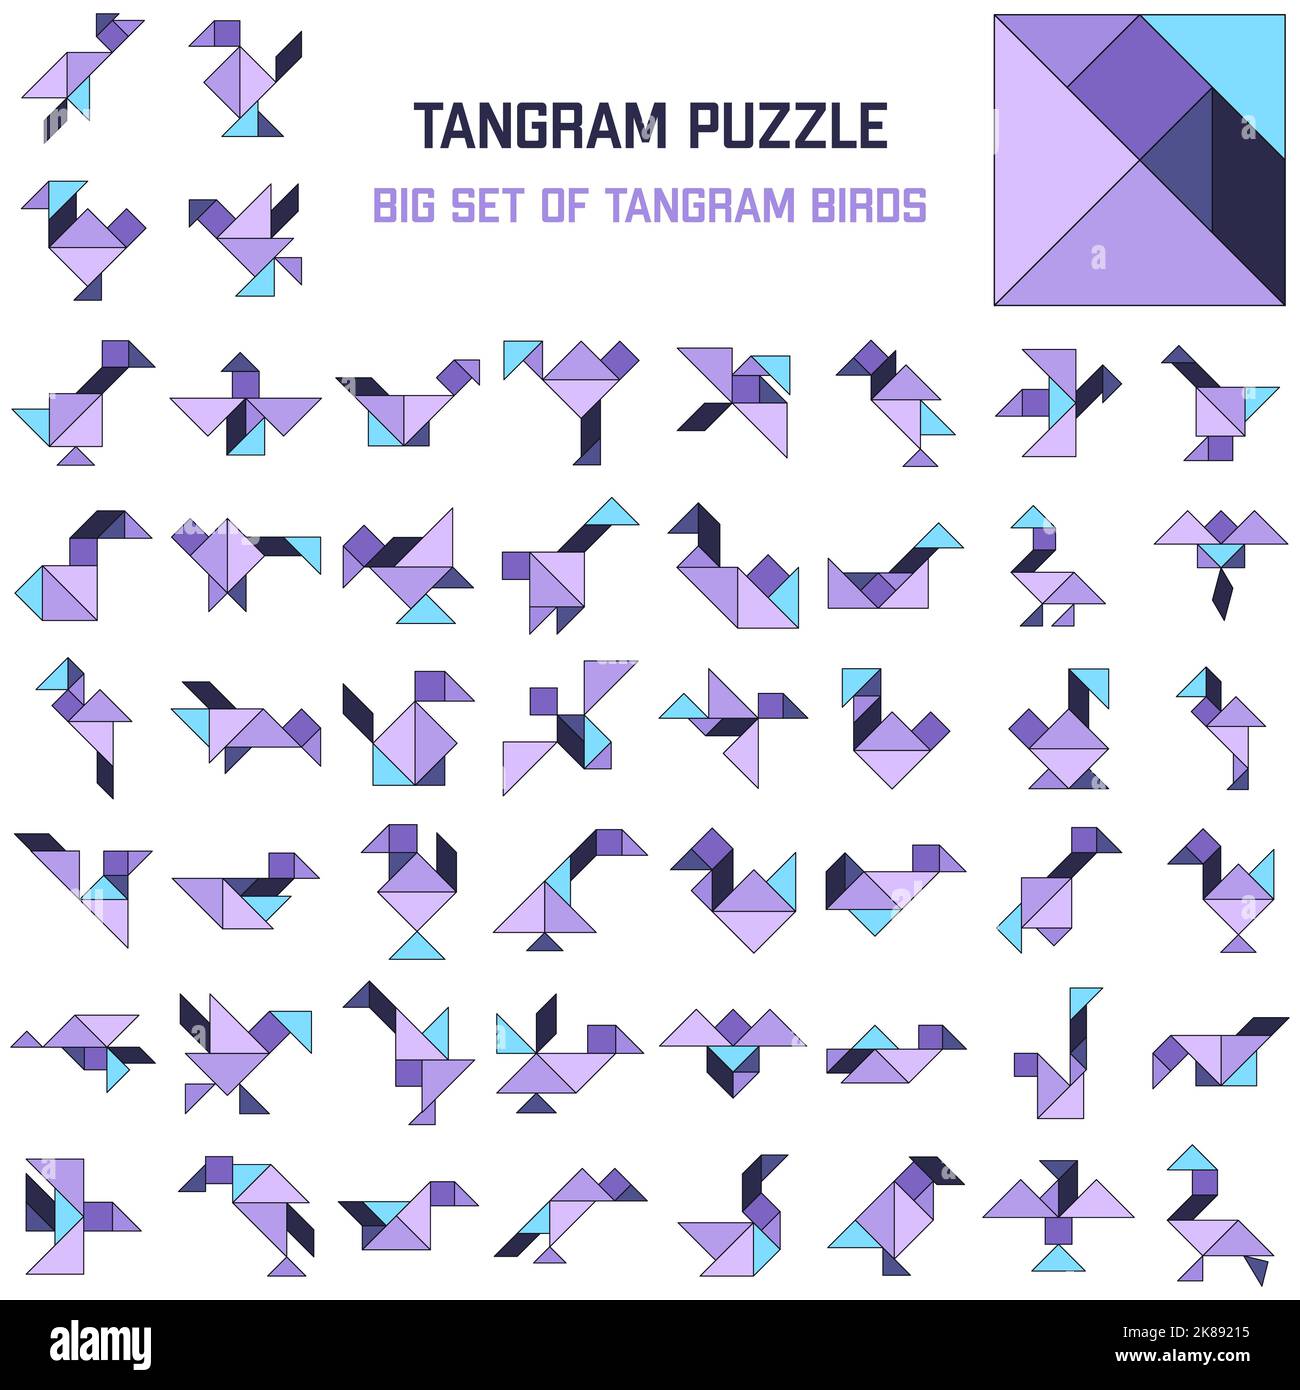 Tangram puzzle. Set of tangram different birds. Stock Vector